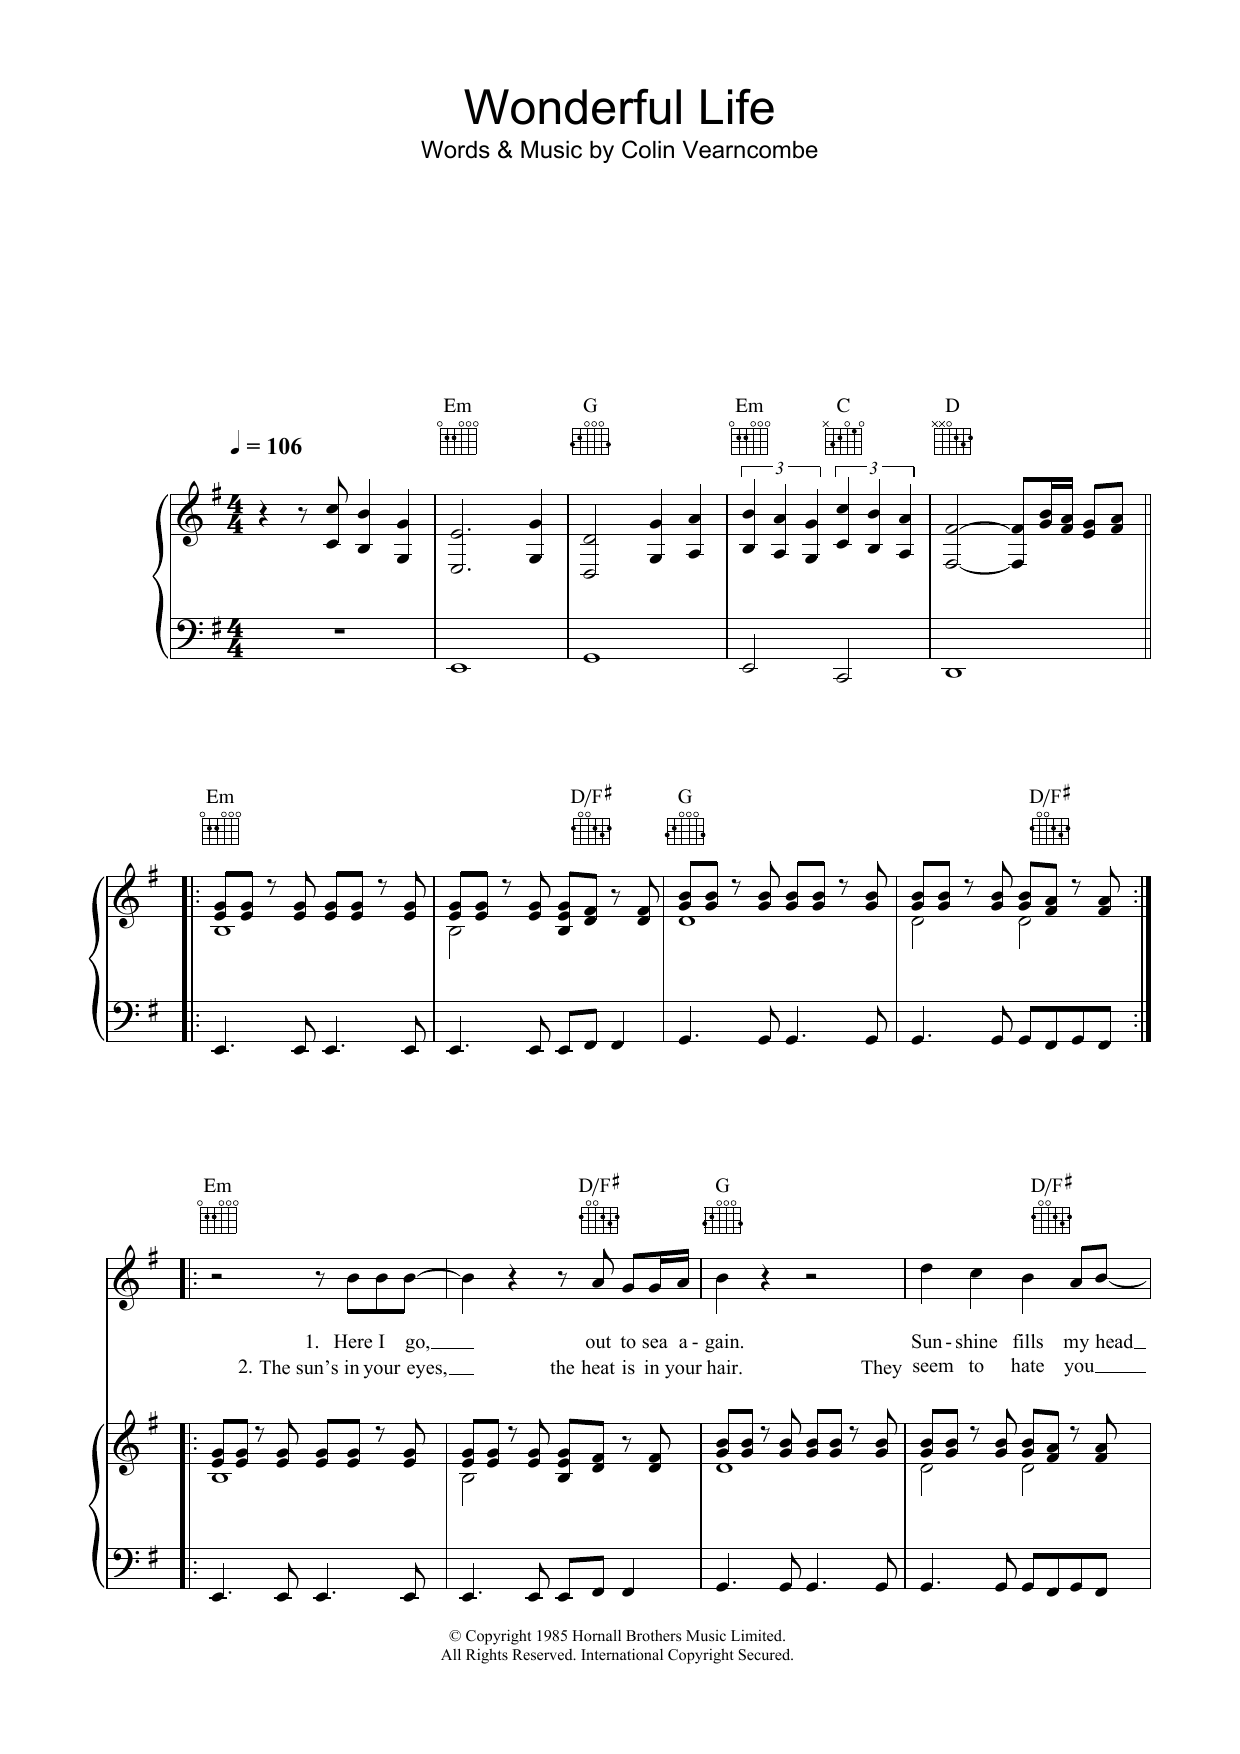 Black Wonderful Life Sheet Music Notes & Chords for Alto Saxophone - Download or Print PDF